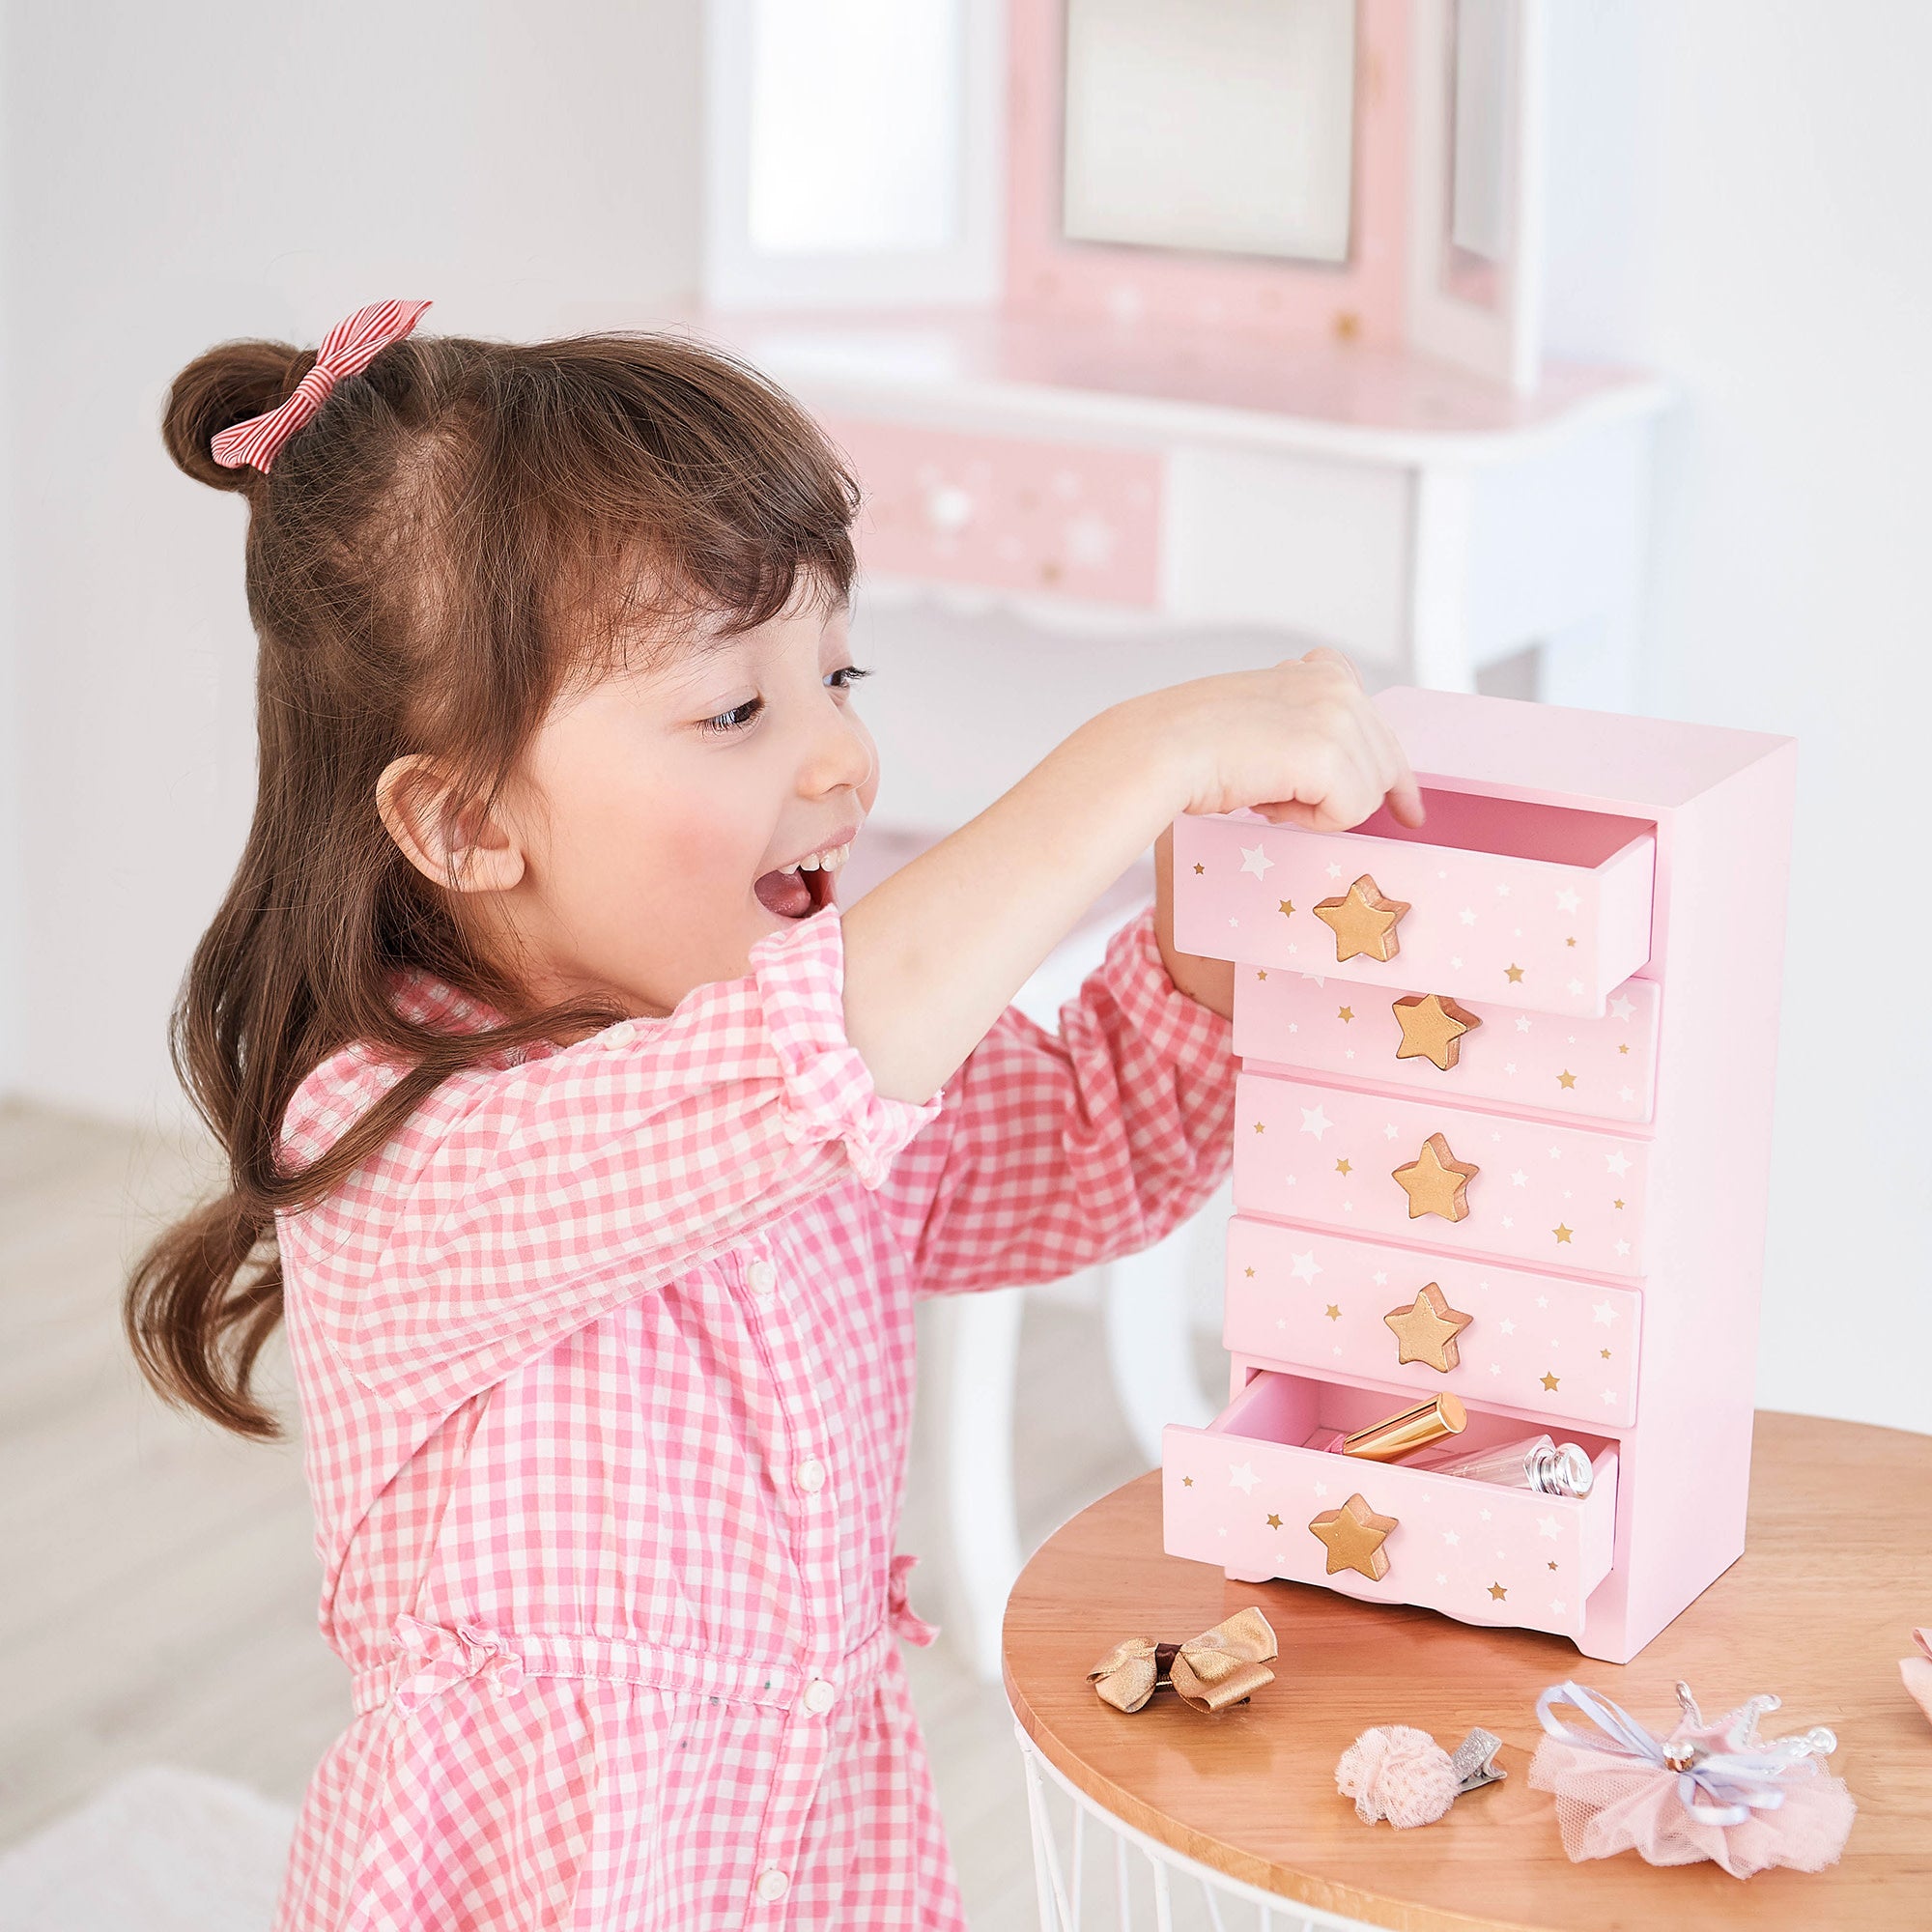 Teamson Kids - Fashion Star Prints Renee Jewelry Box - Pink / White / Gold